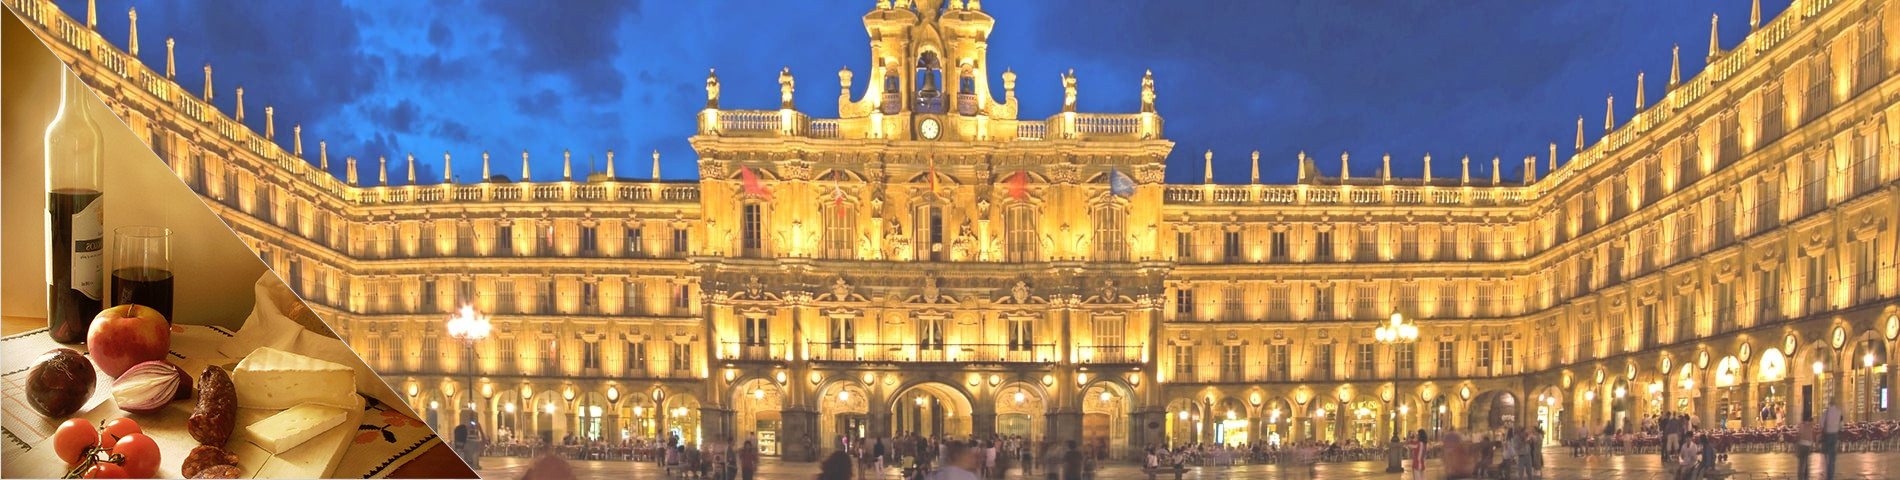 Salamanca - Spanisch & Kultur